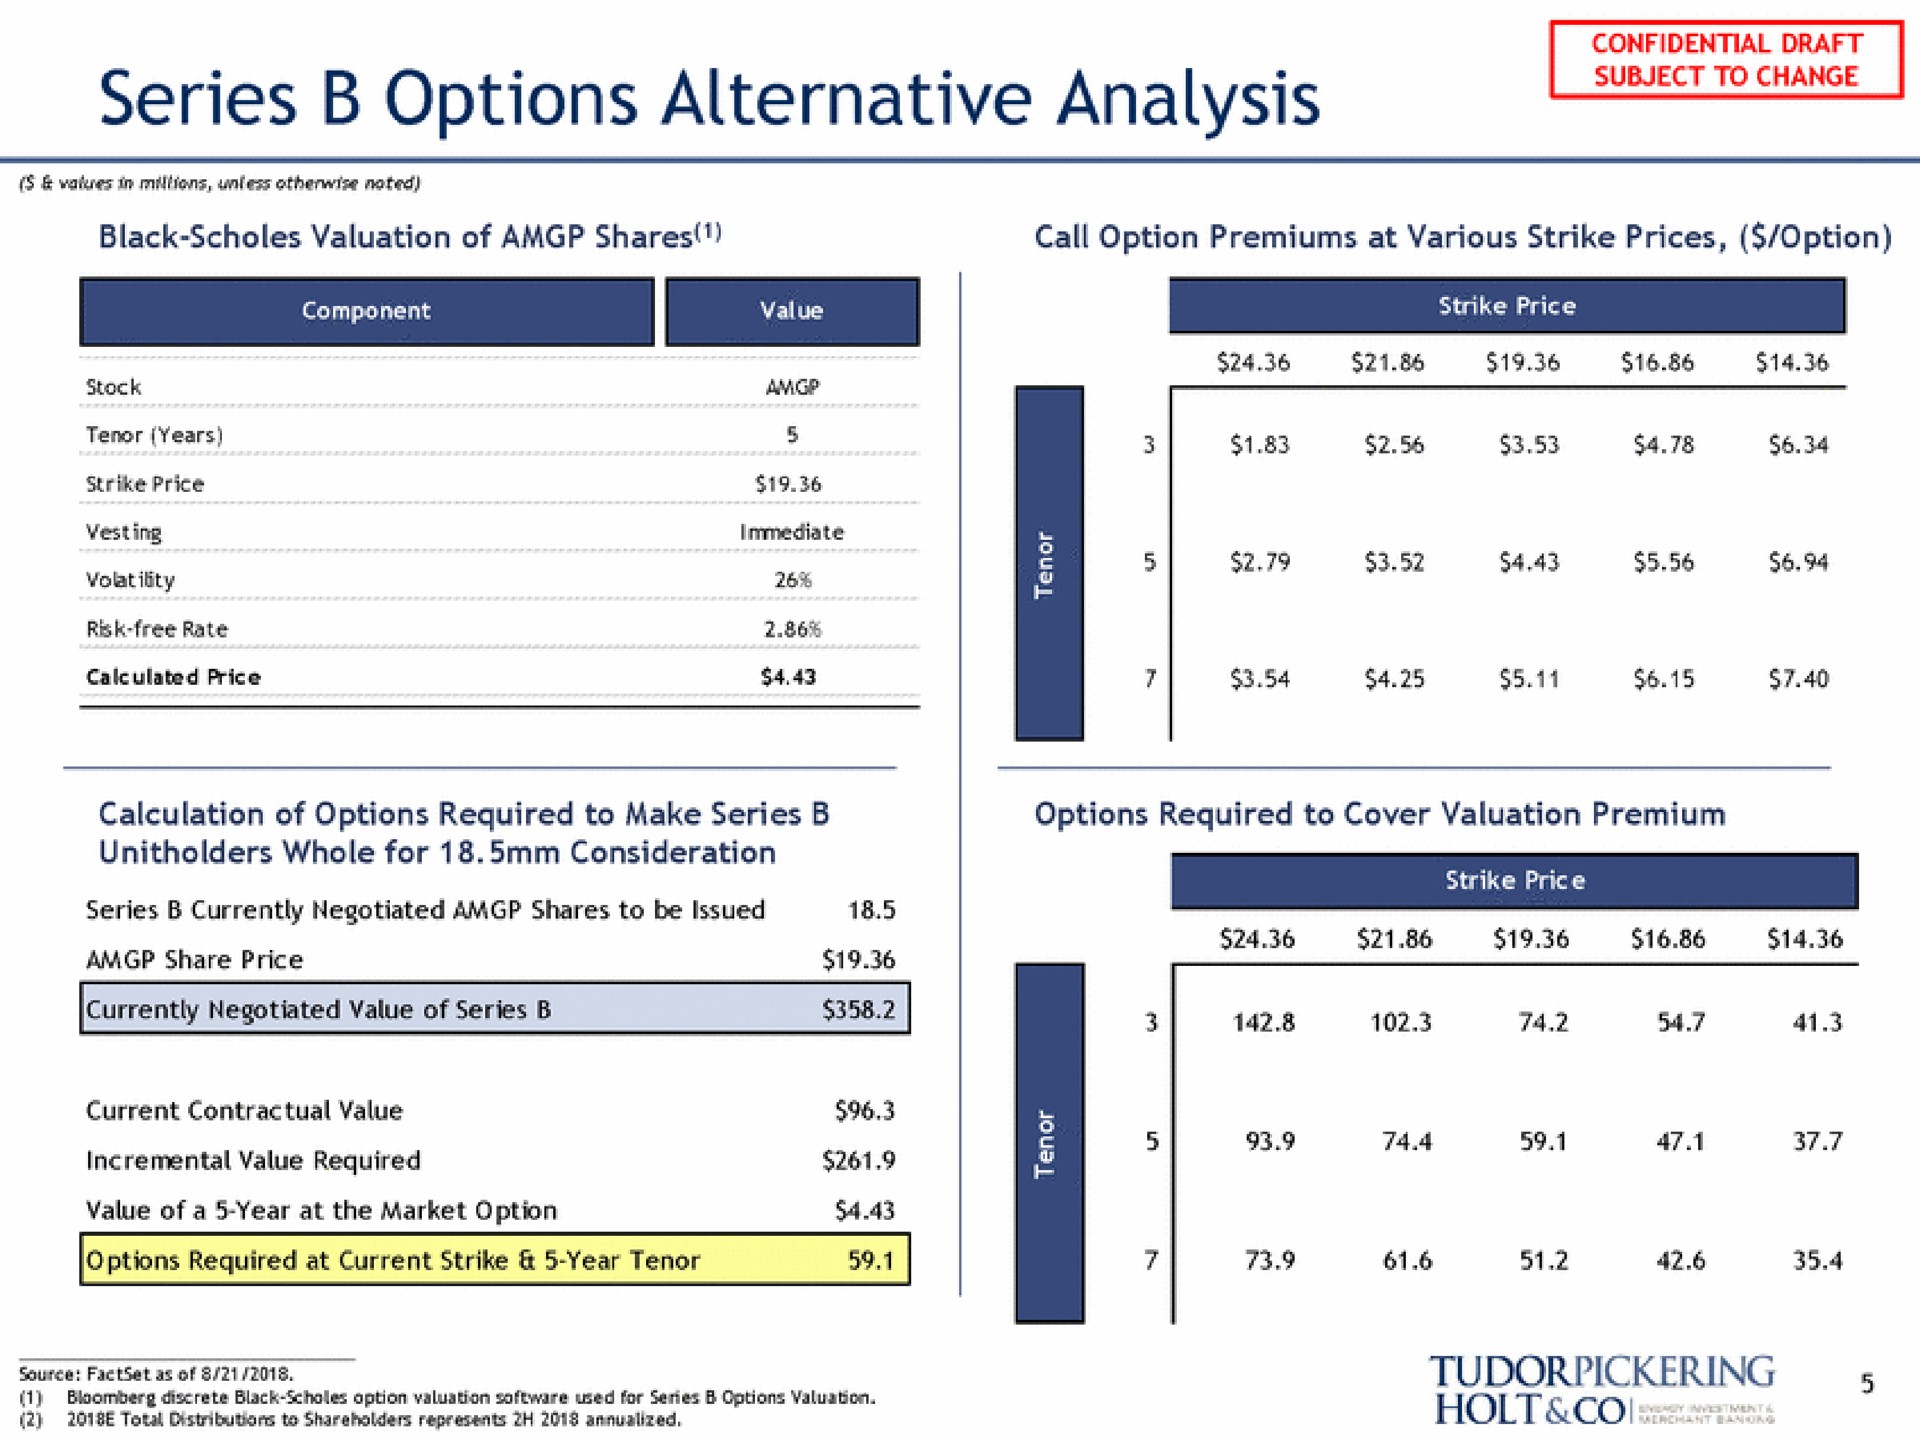 series options alternative analysis holt see | Tudor, Pickering, Holt & Co